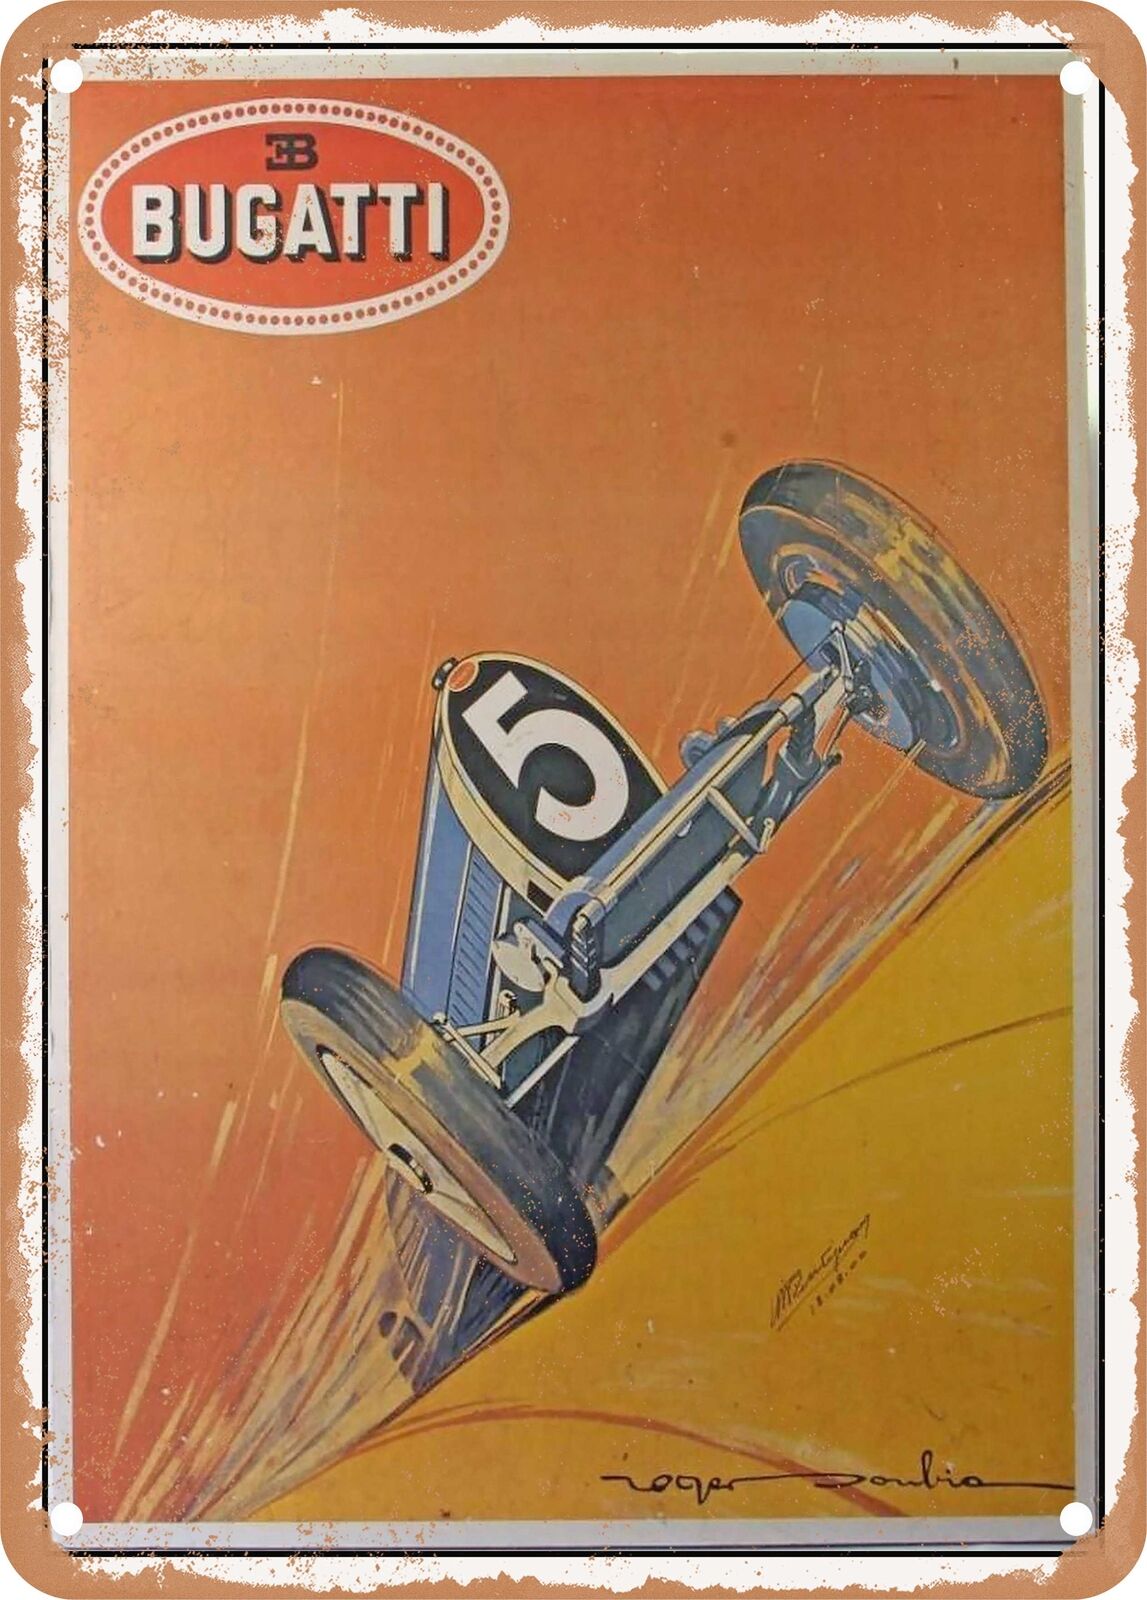 METAL SIGN - 1924 Bugatti Type 35 Vintage Ad